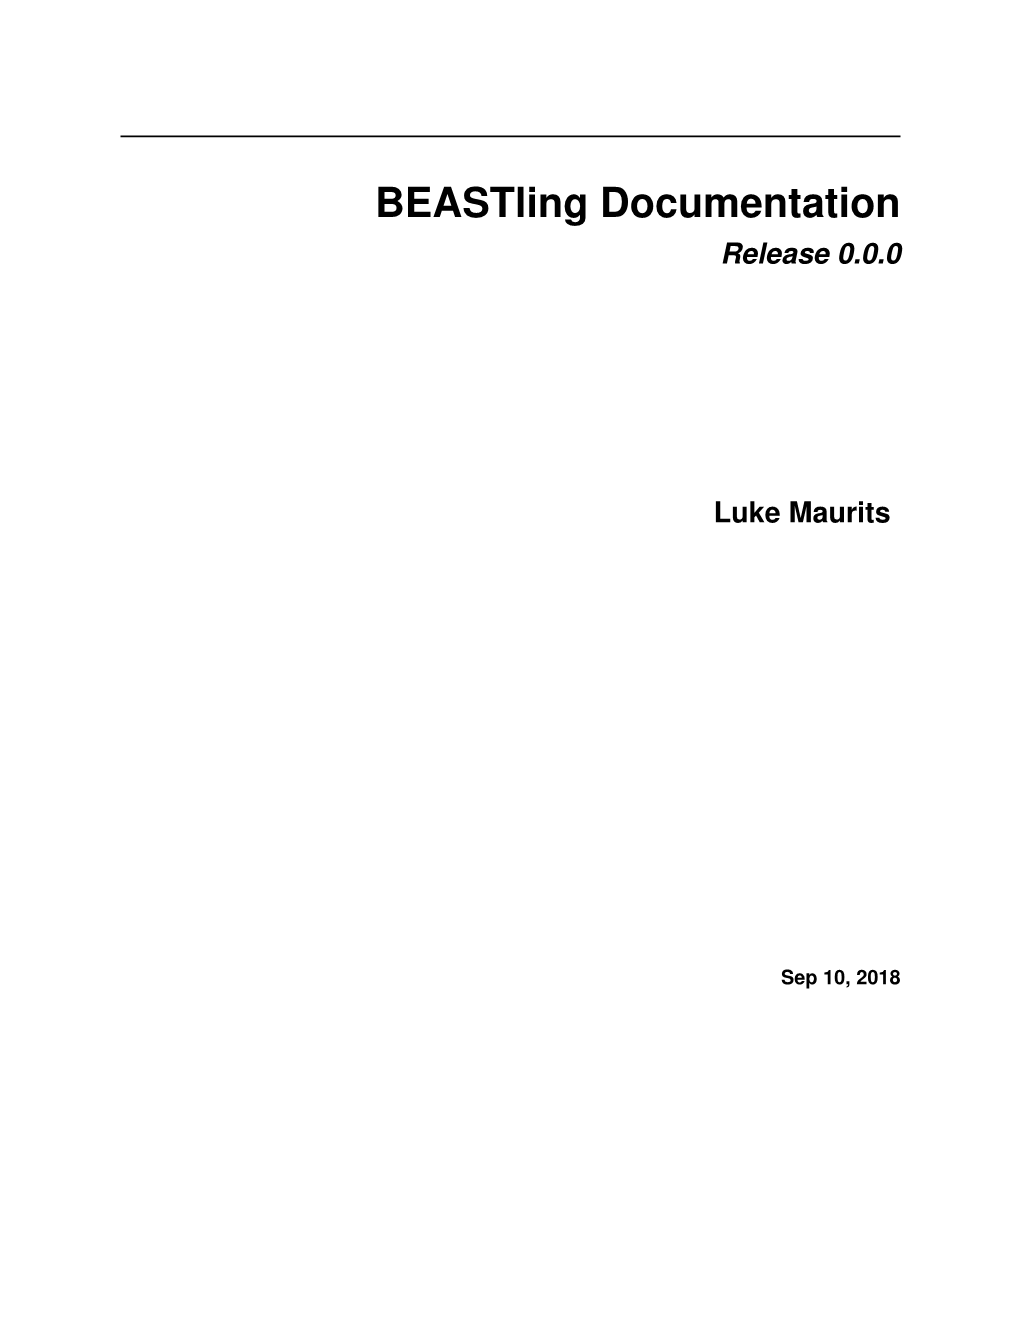 Beastling Documentation Release 0.0.0 Luke Maurits